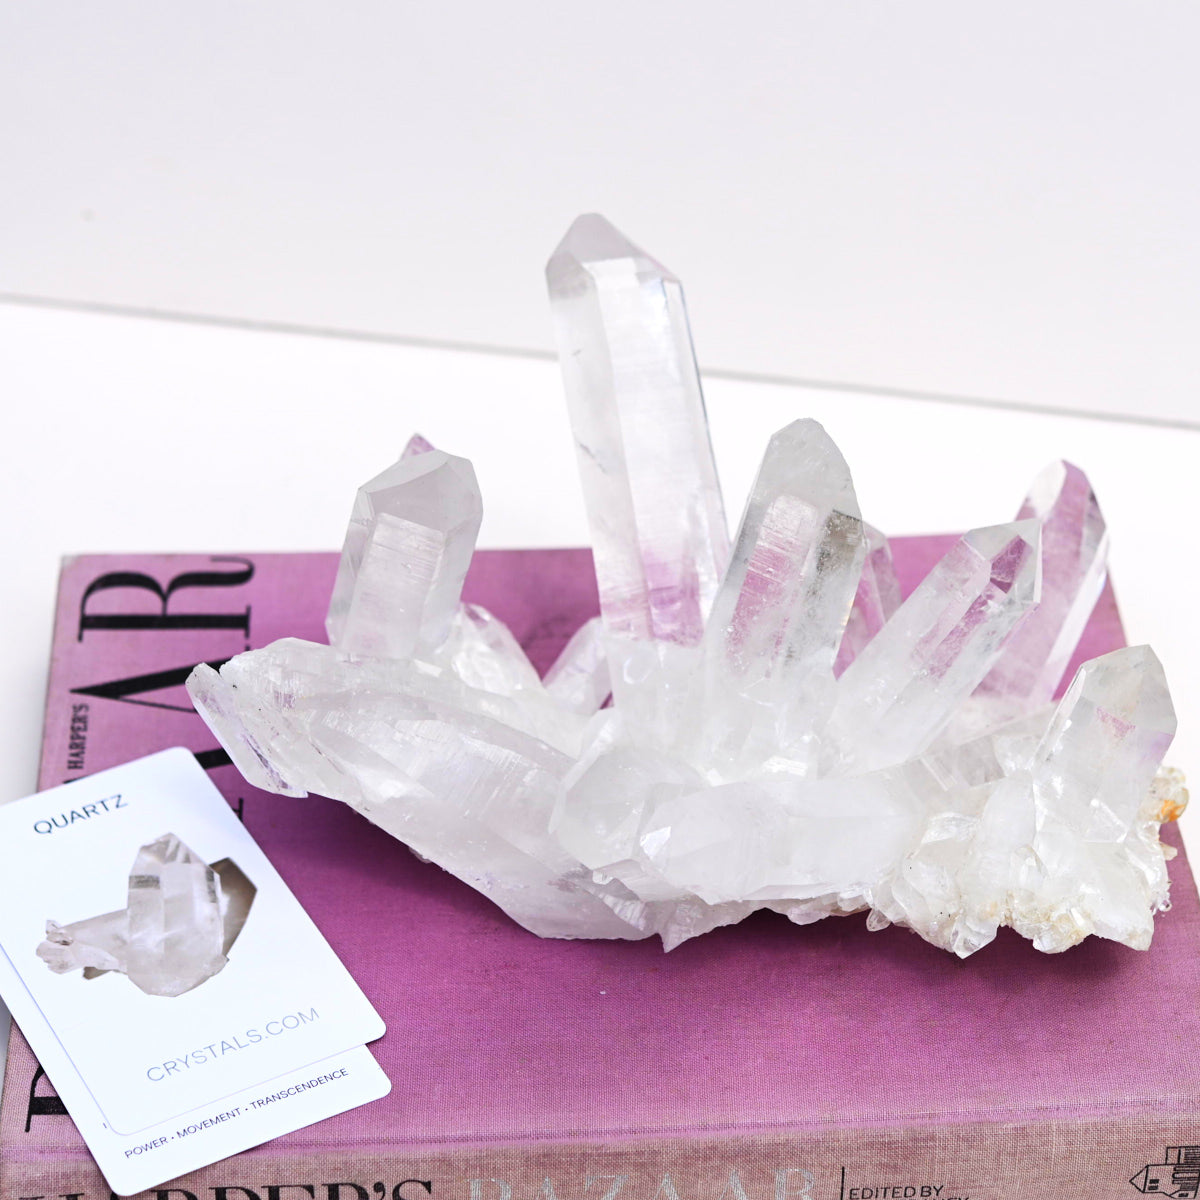 himalayan quartz crystals for sale